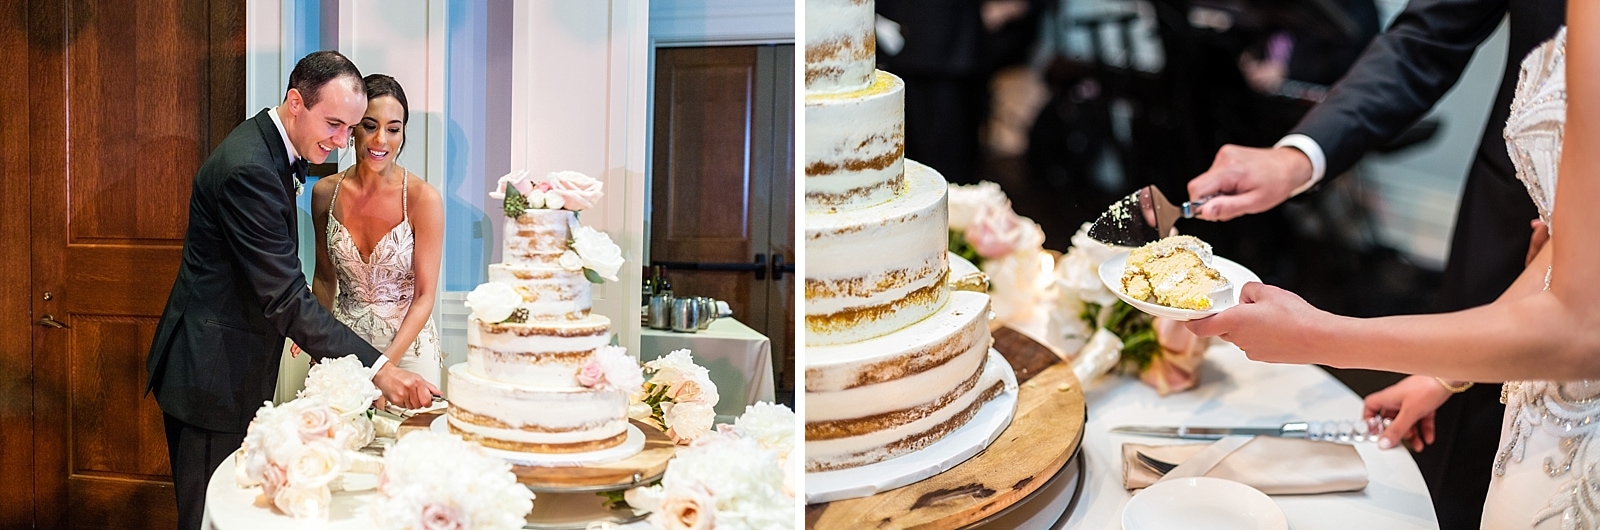 Wedding cake cutting, bride and groom cutting cake, unique wedding cake